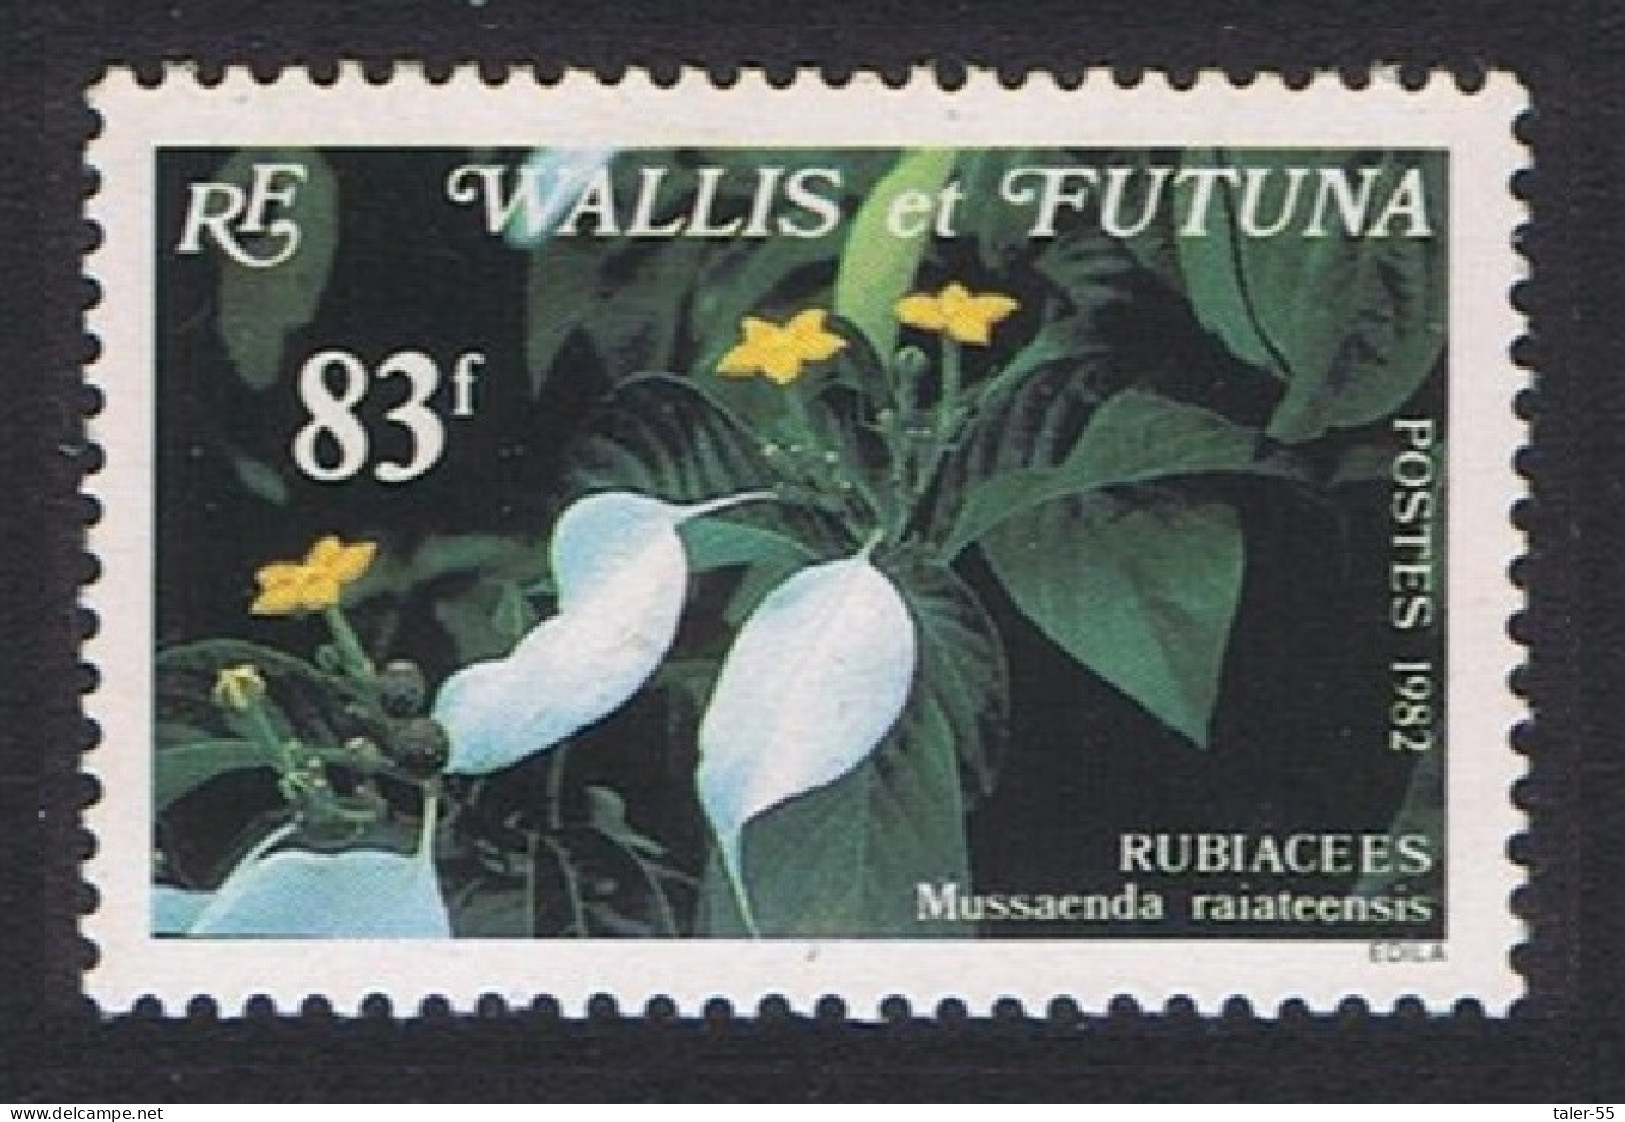 Wallis And Futuna Orchids Mussaenda Raiateensis 83f 1982 MNH SG#399 Sc#286 - Nuovi